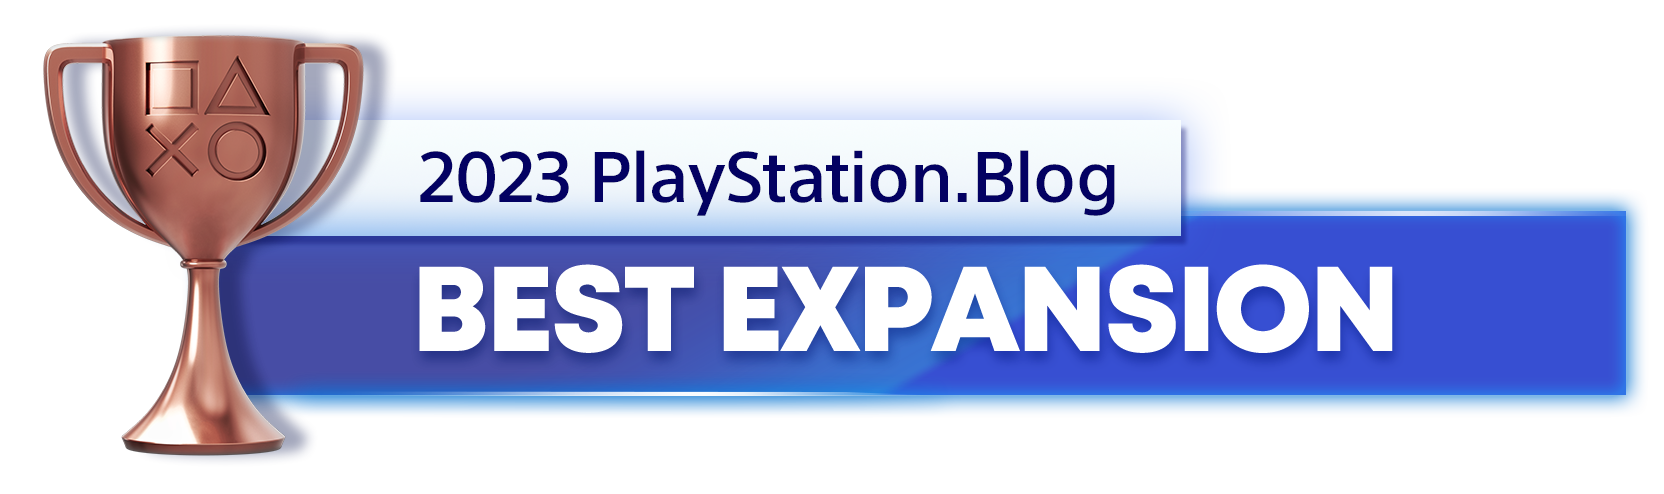  "Bronze Trophy for the 2023 PlayStation Blog Best Expansion Winner"